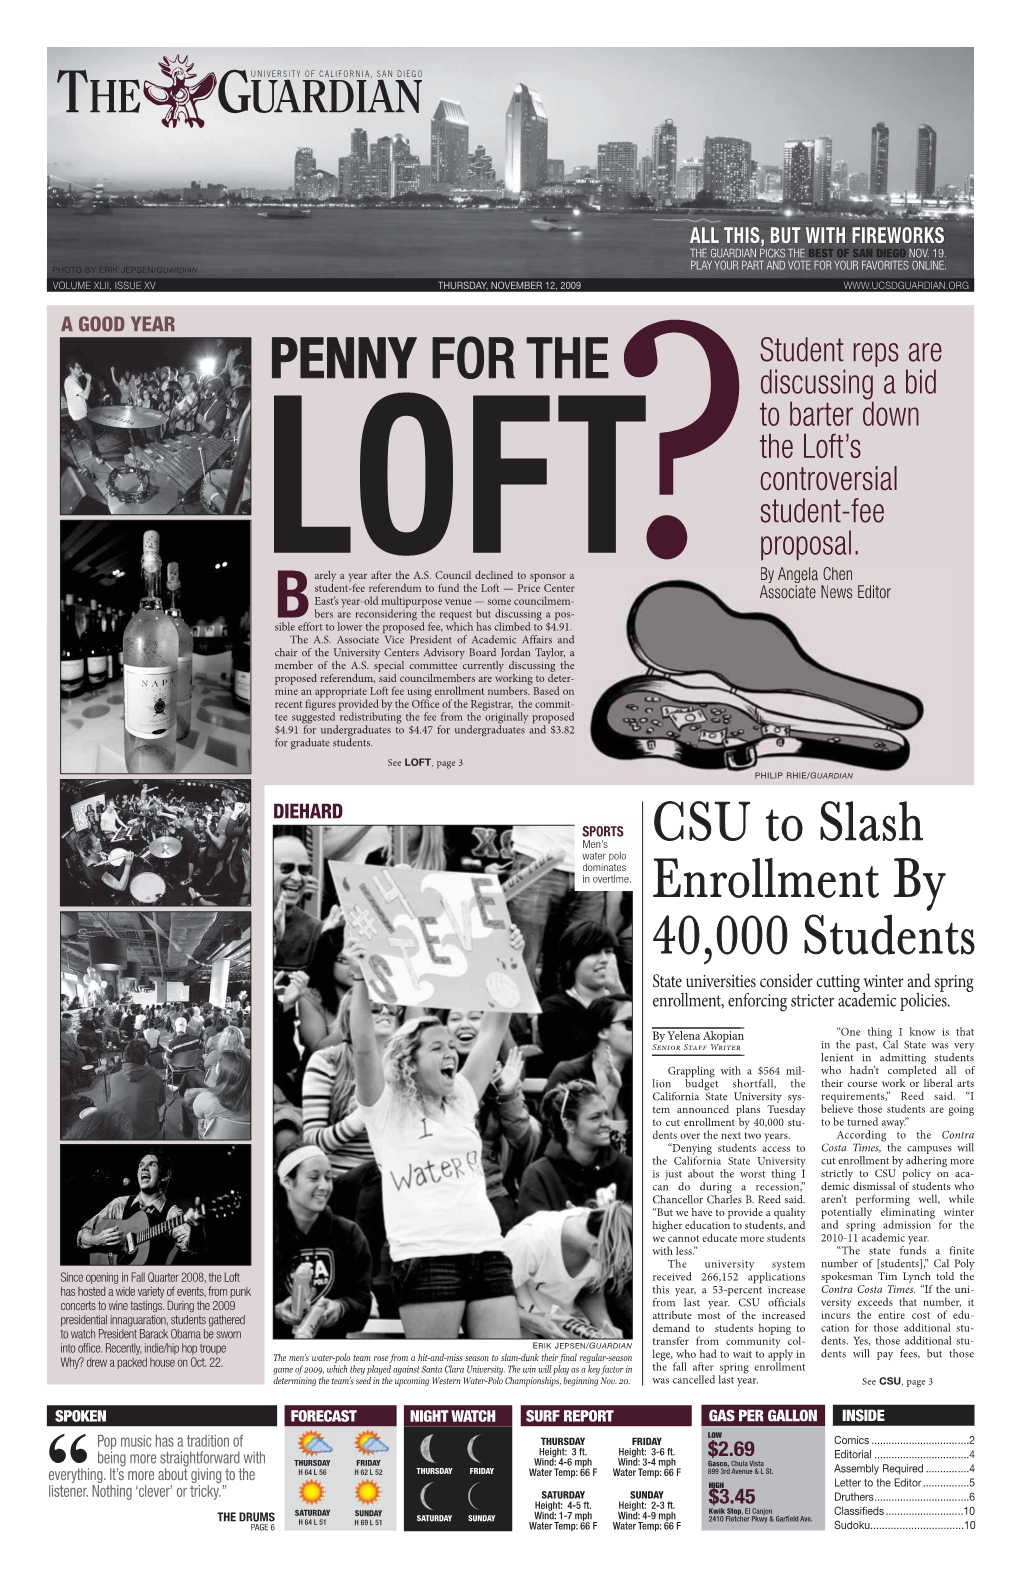 CSU to Slash Enrollment by 40,000 Students